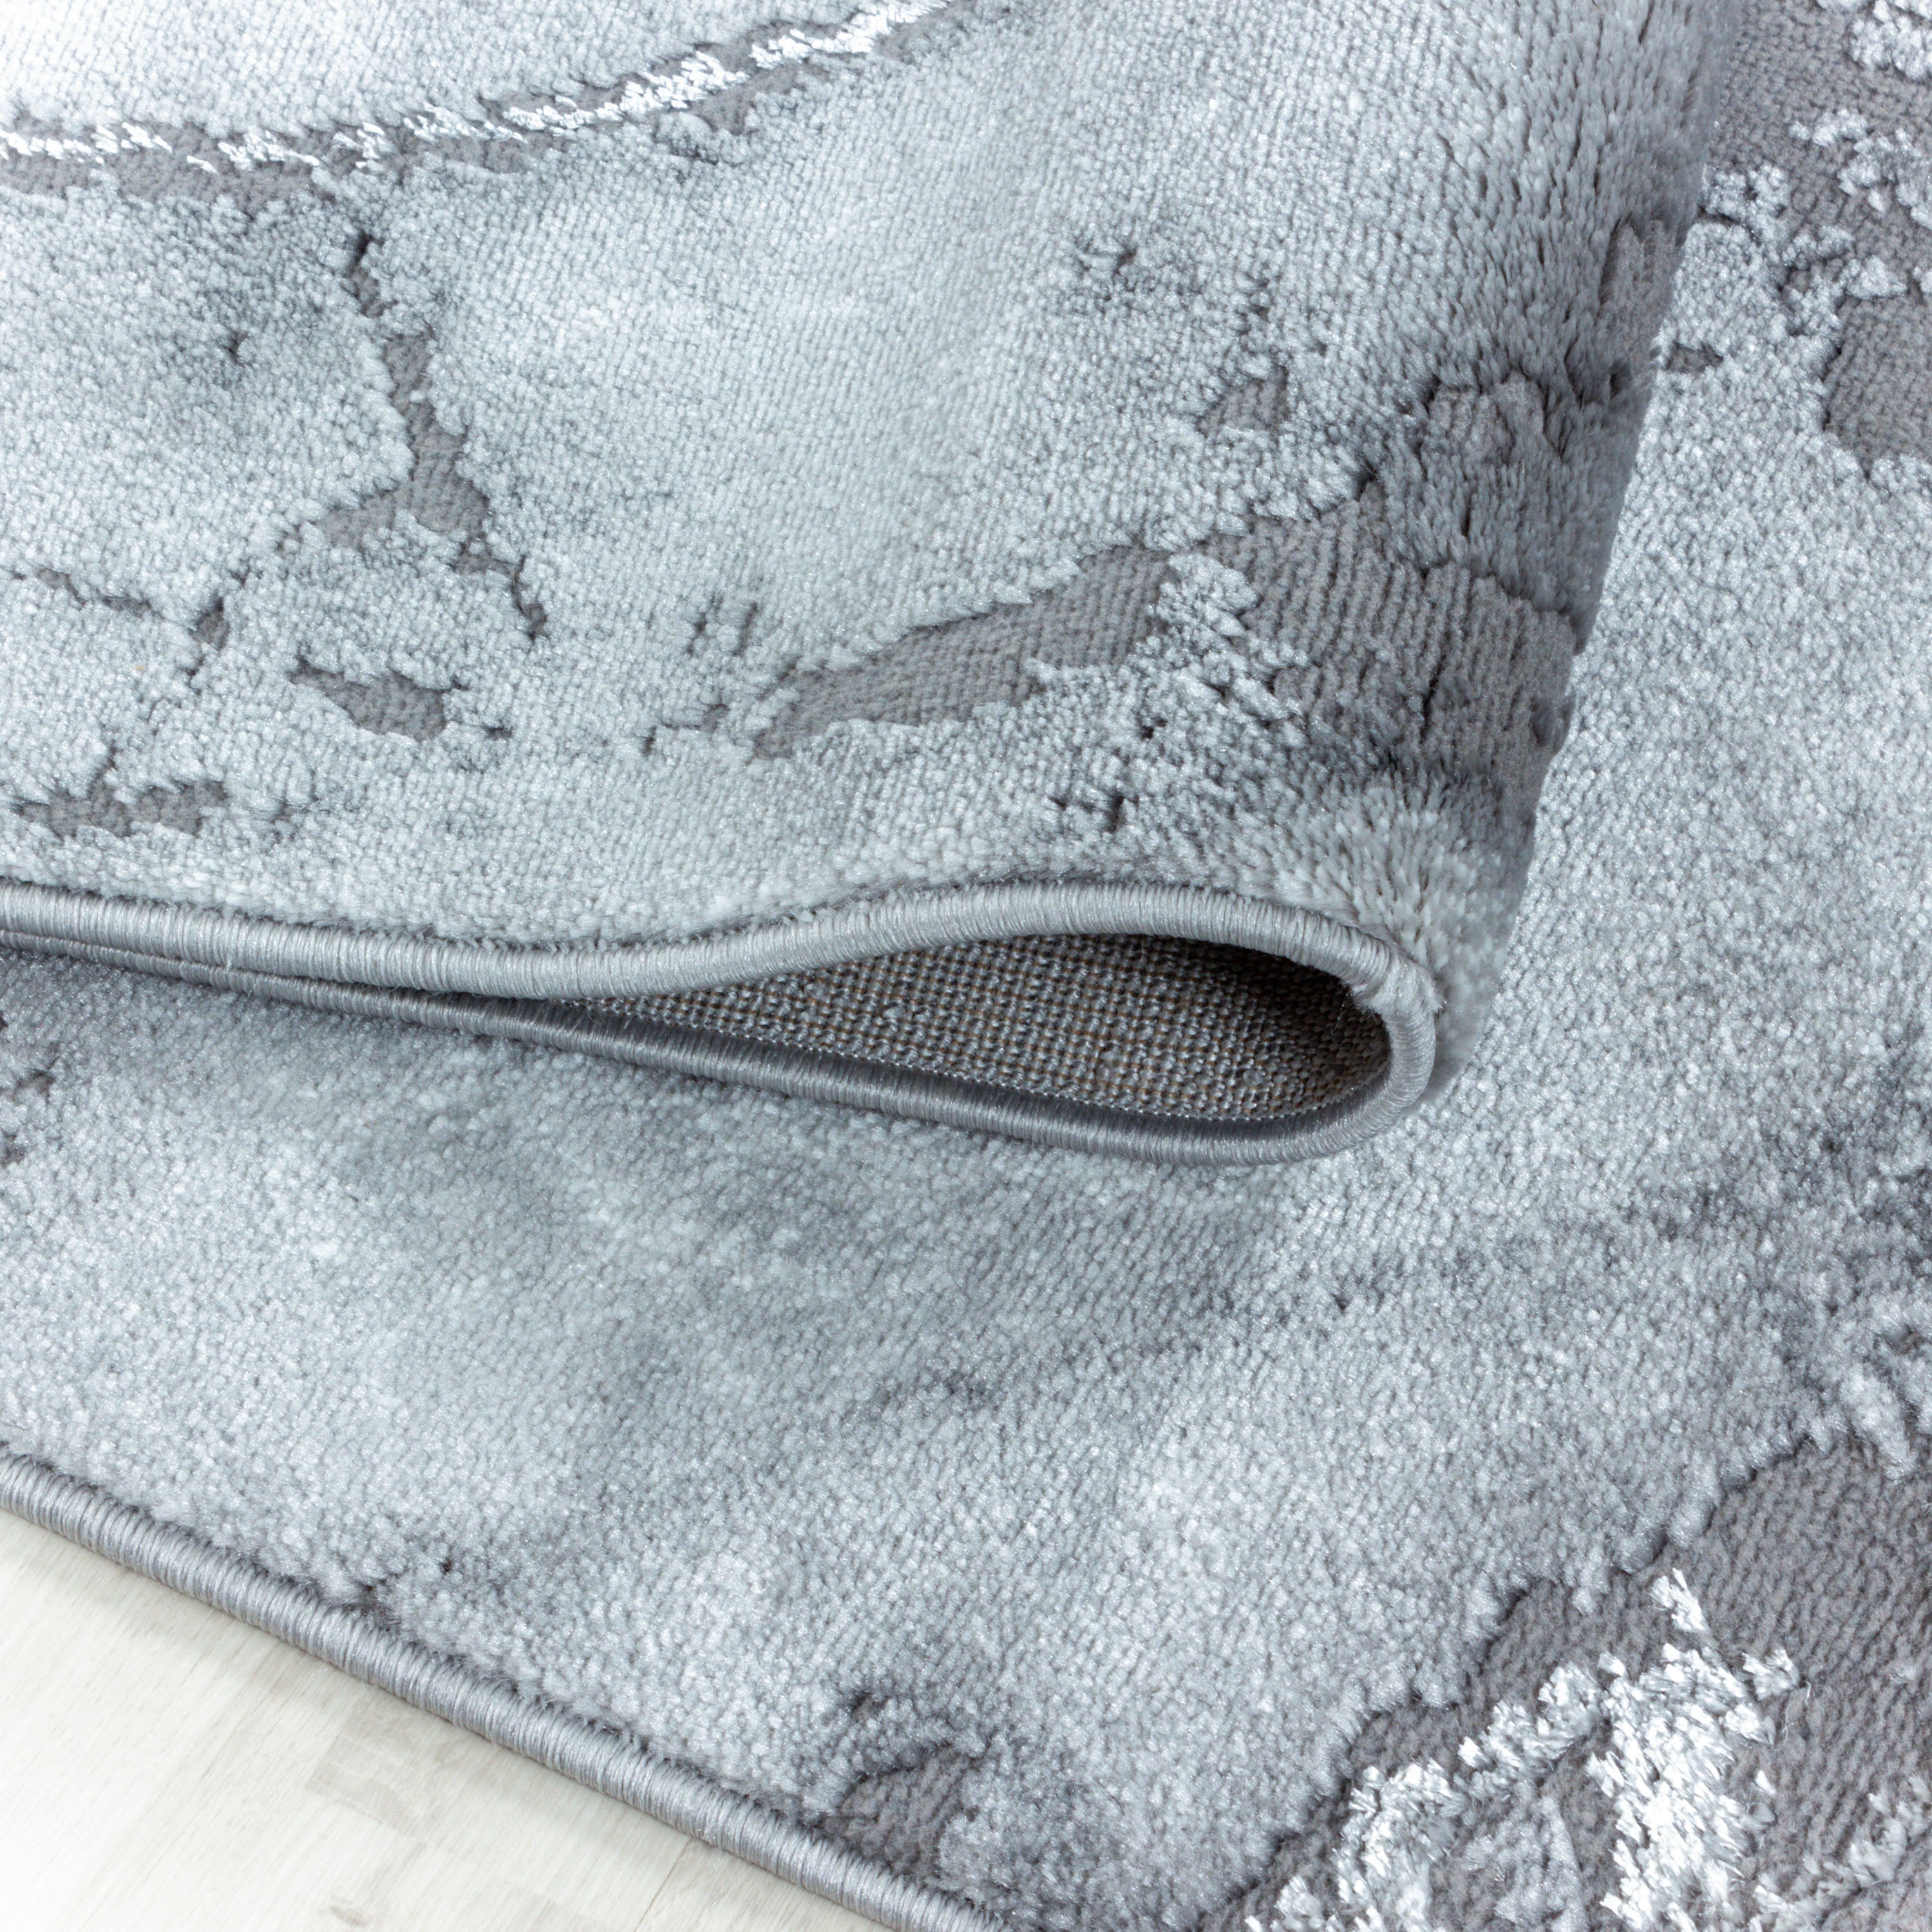 Kurzflor Teppich Wohnzimmerteppich 3-D Muster Marmoriert Soft Touch Flor Silber